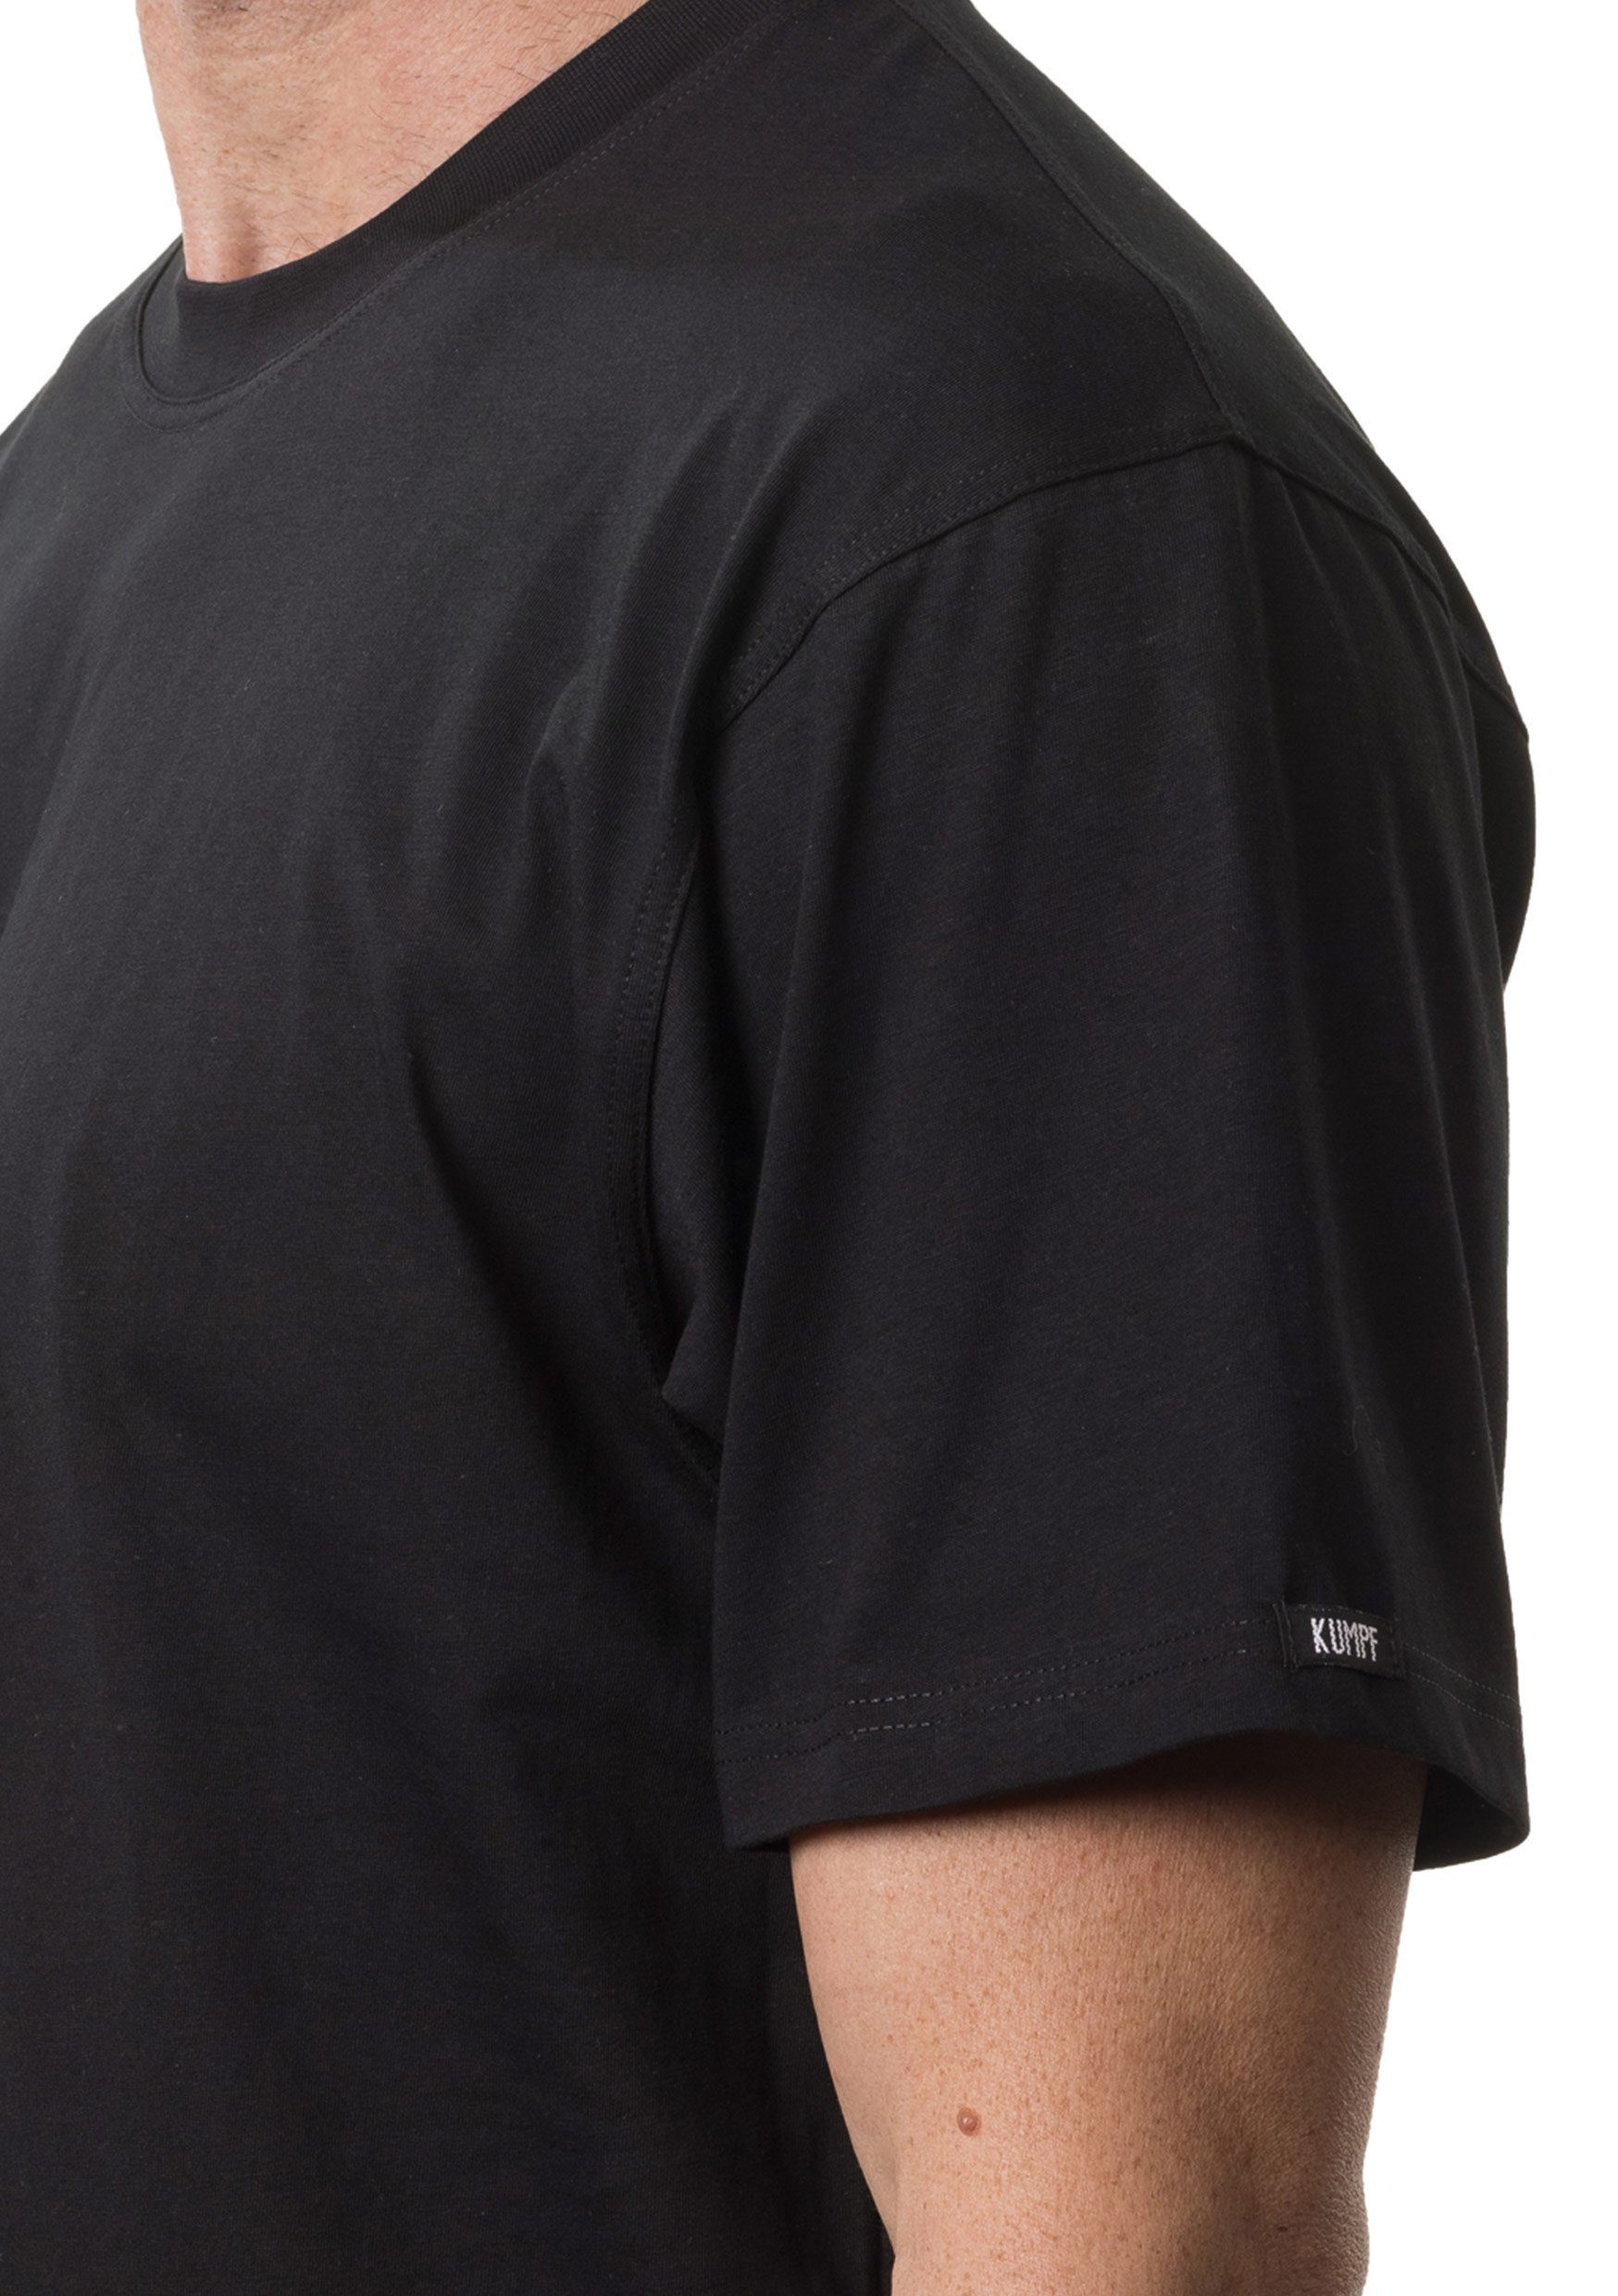 Cotton Bio Herren T-Shirt 1-St) hohe Markenqualität 1/2 schwarz KUMPF (Stück, Arm Unterziehshirt